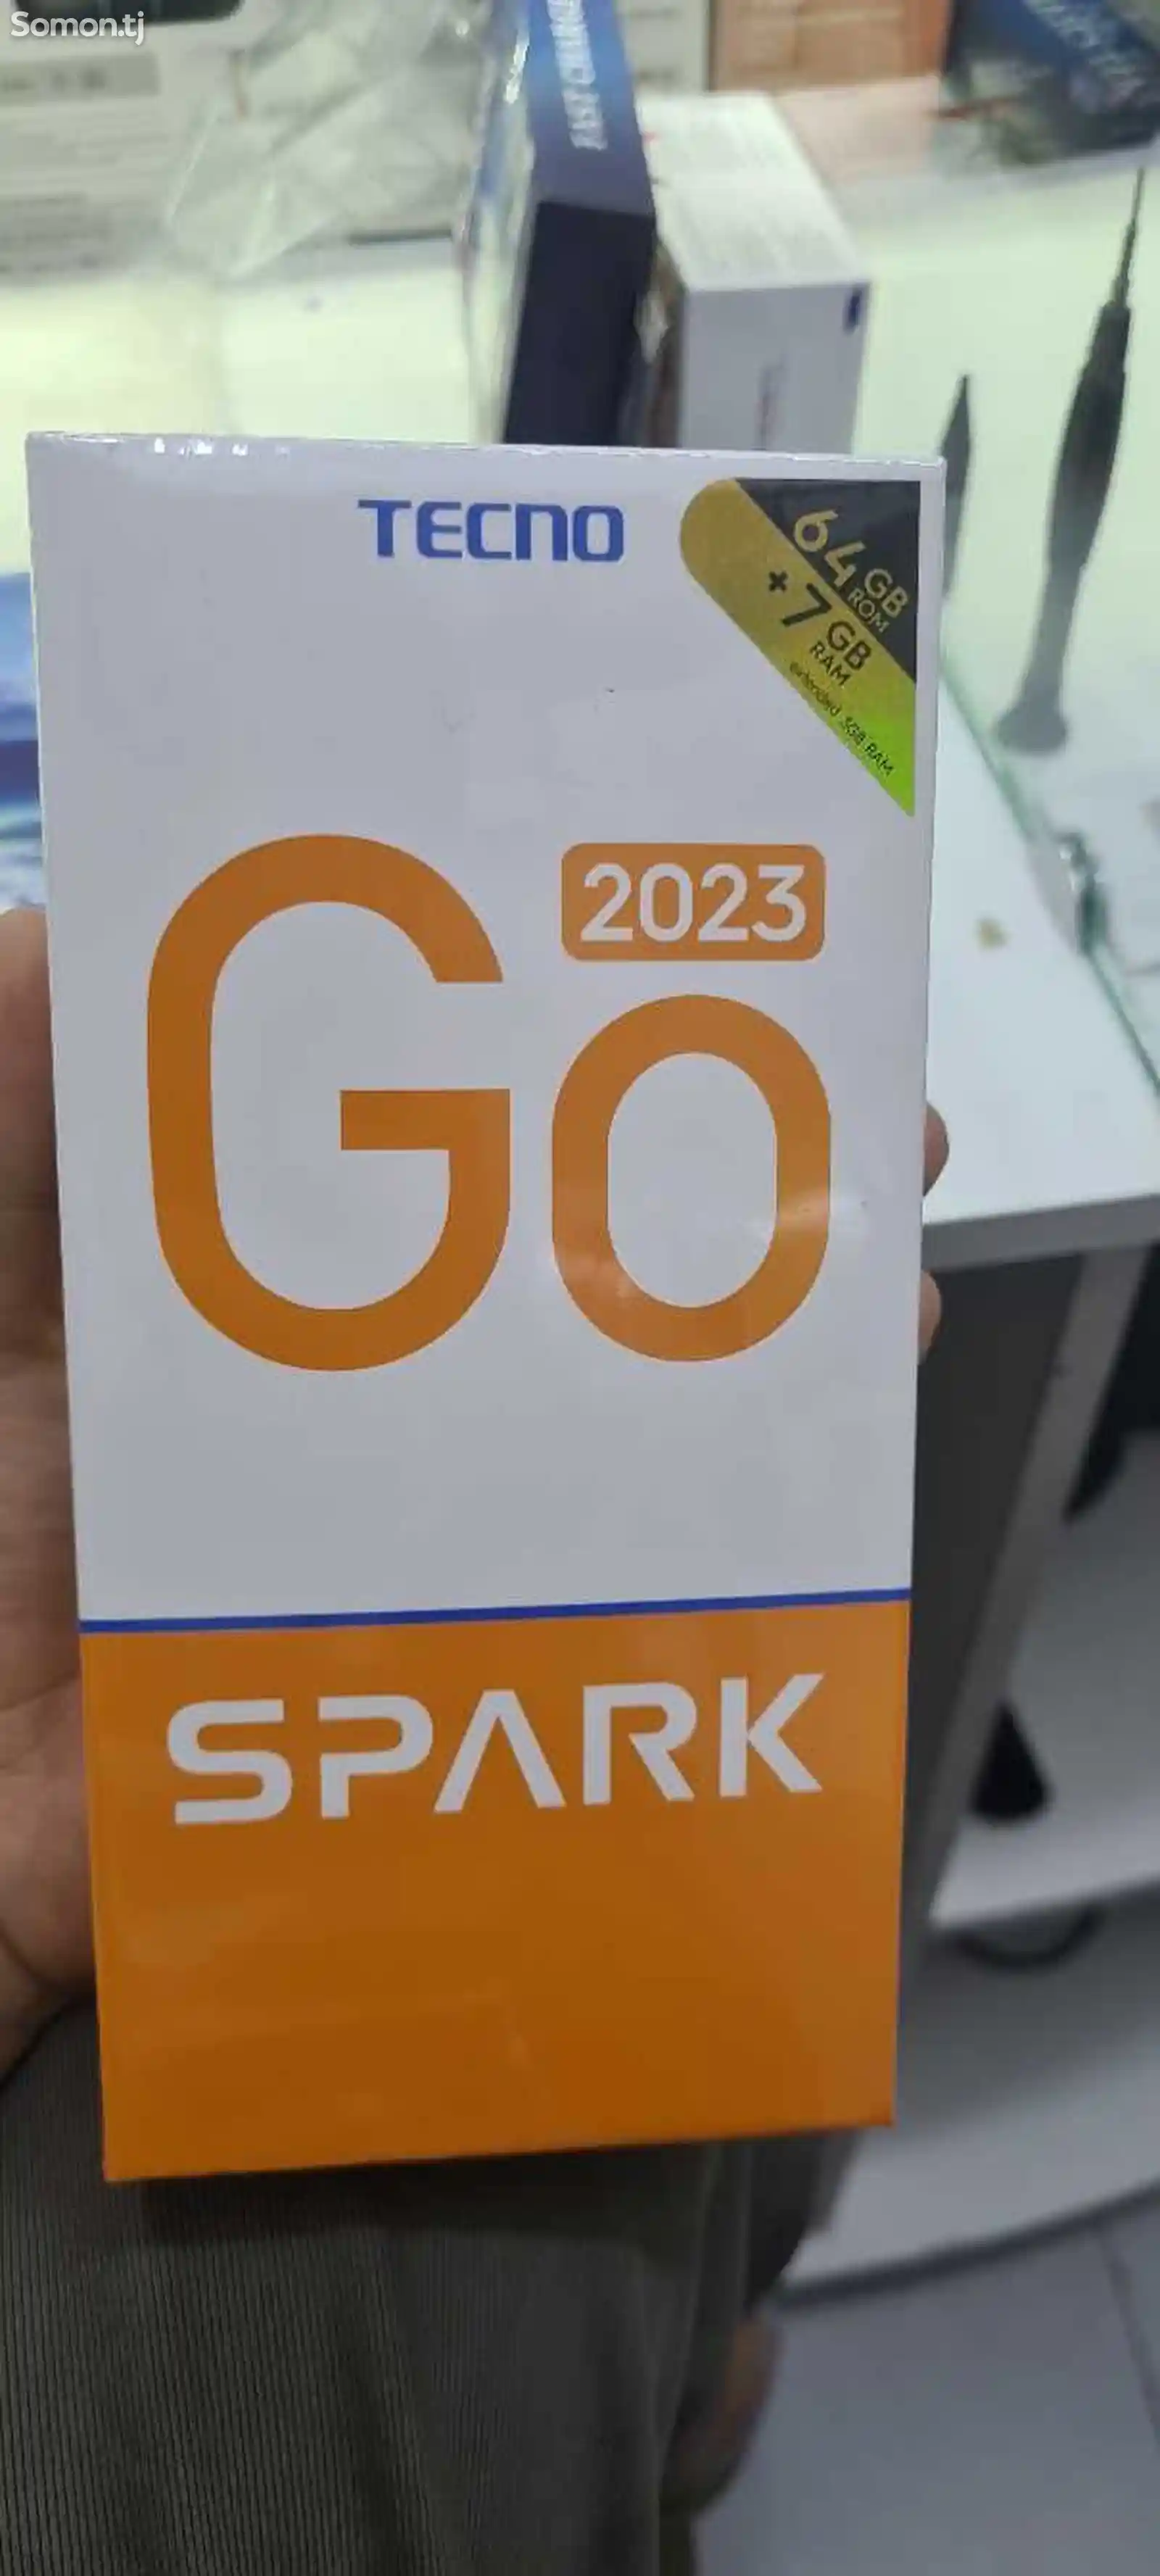 Tecno spark Go 2023-1